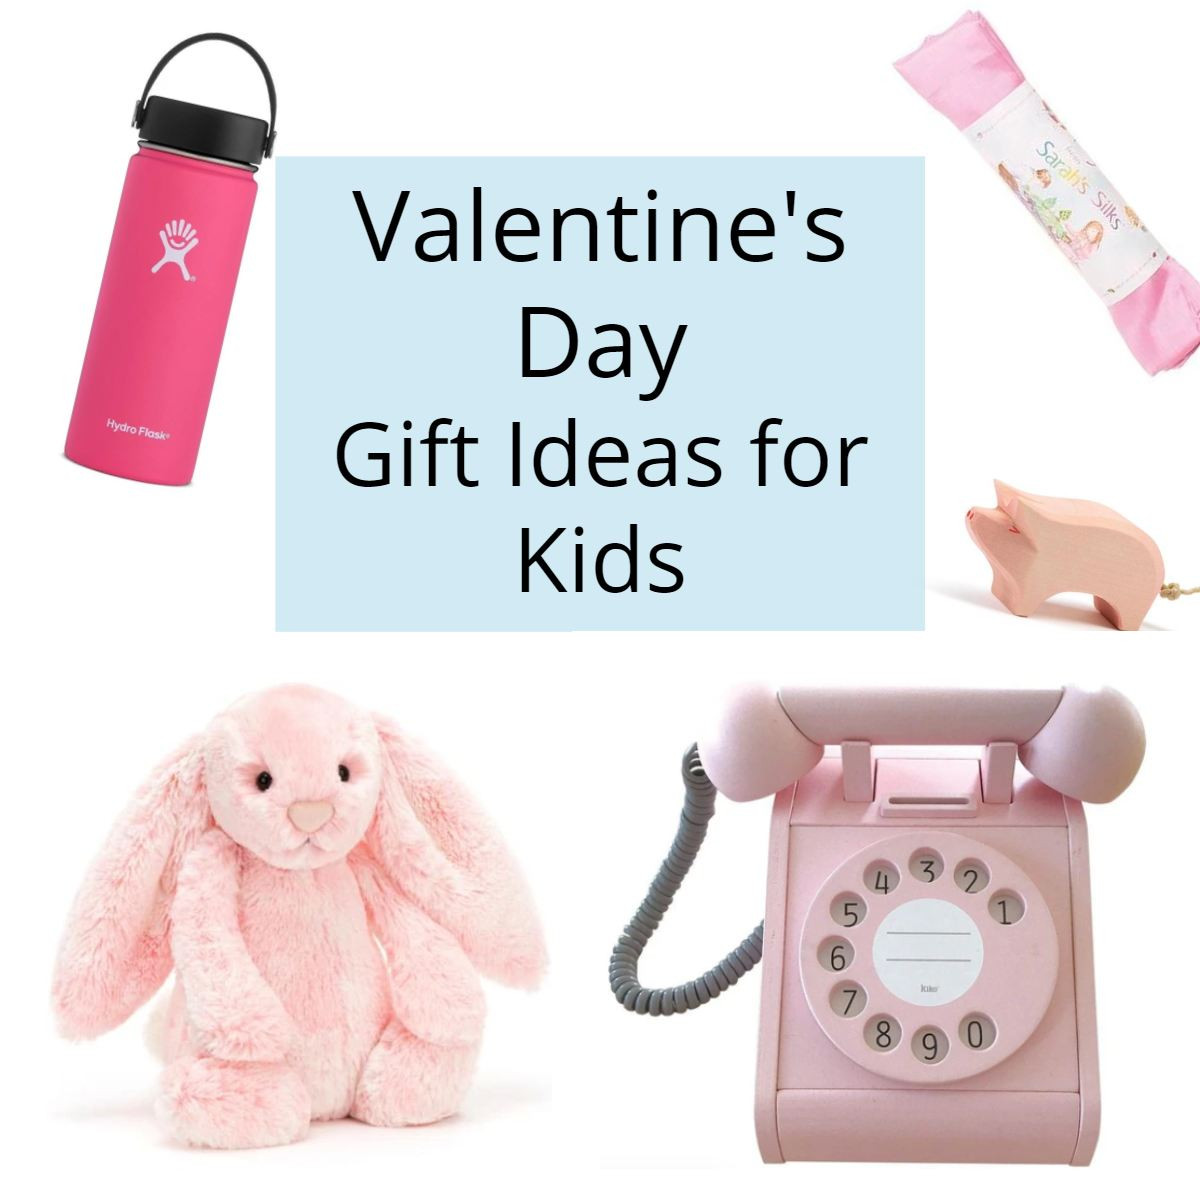 Valentine'S Day 2020 Gift Ideas
 Valentine s Day Gift Ideas for Kids 2020 The Modern